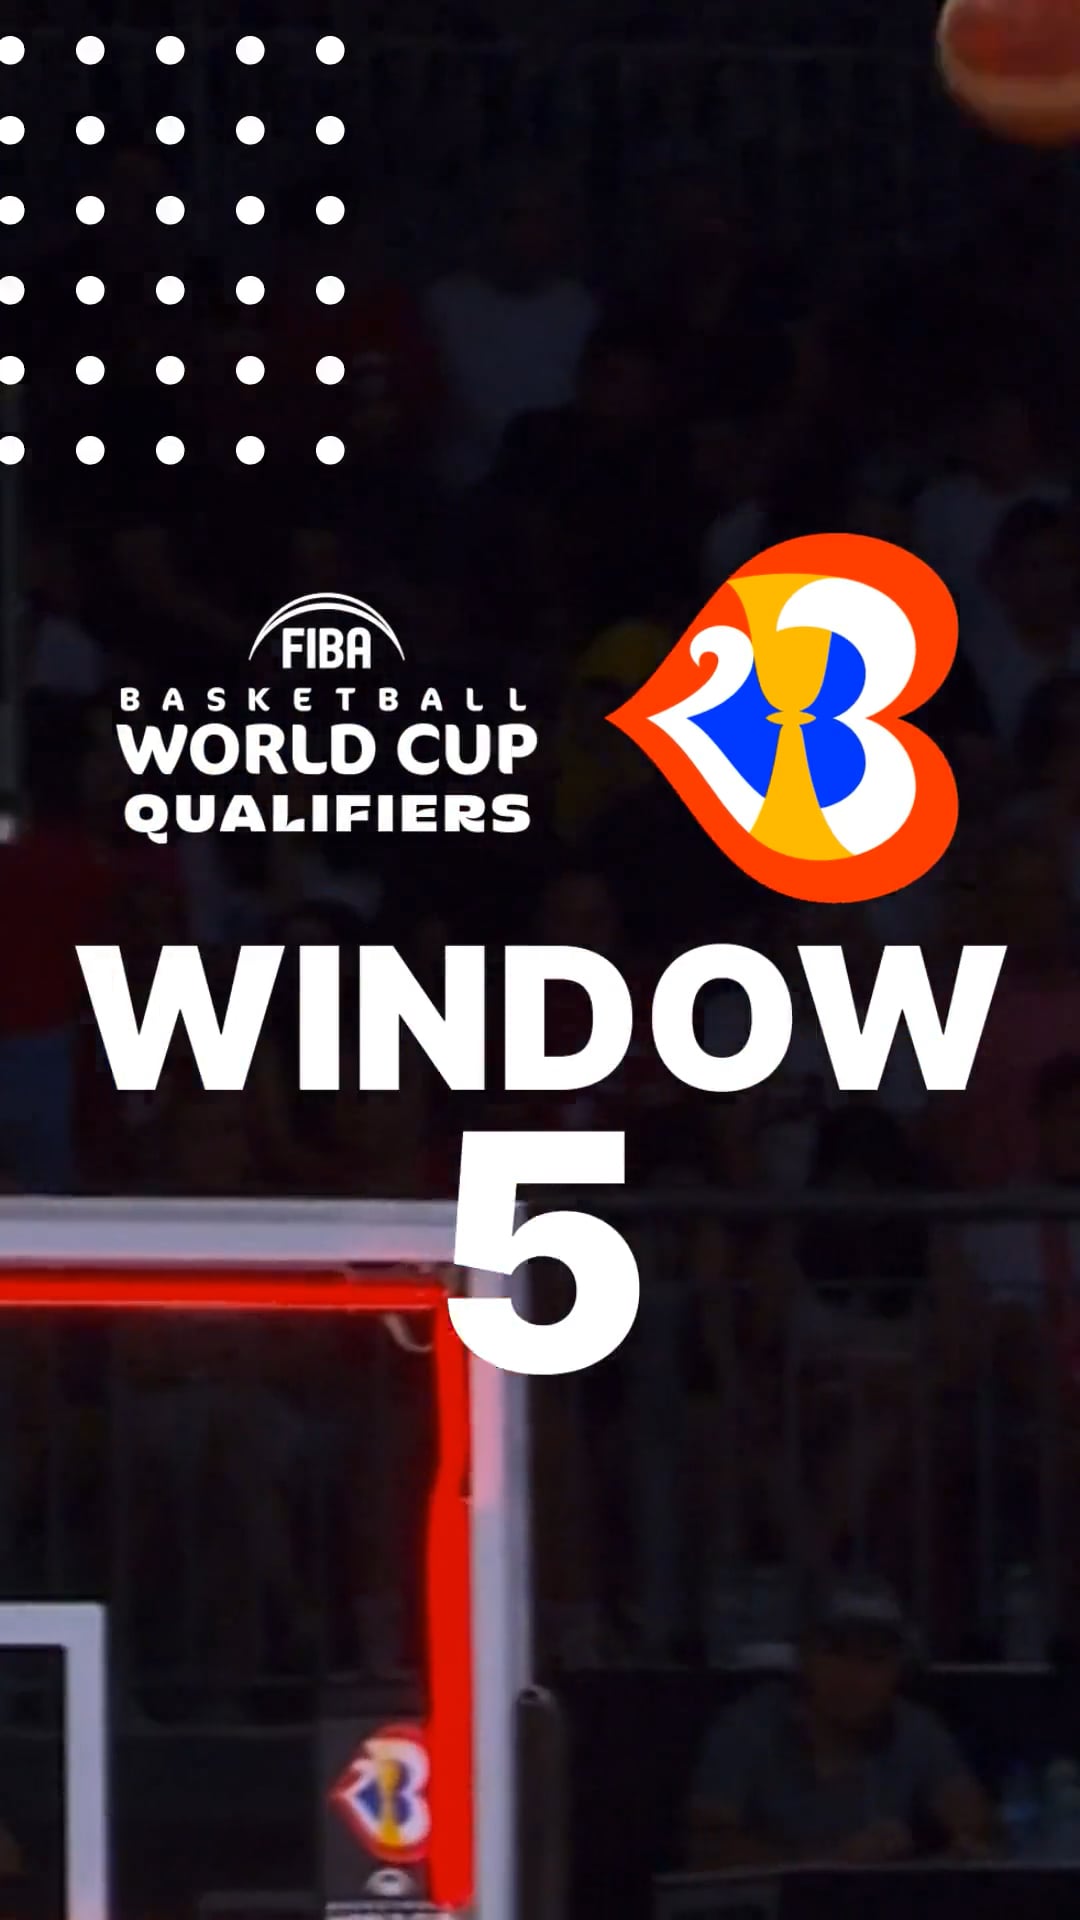 FIBA Basketball Courtside 1891 Basketball World Cup Hype Reel Motion Video on Vimeo